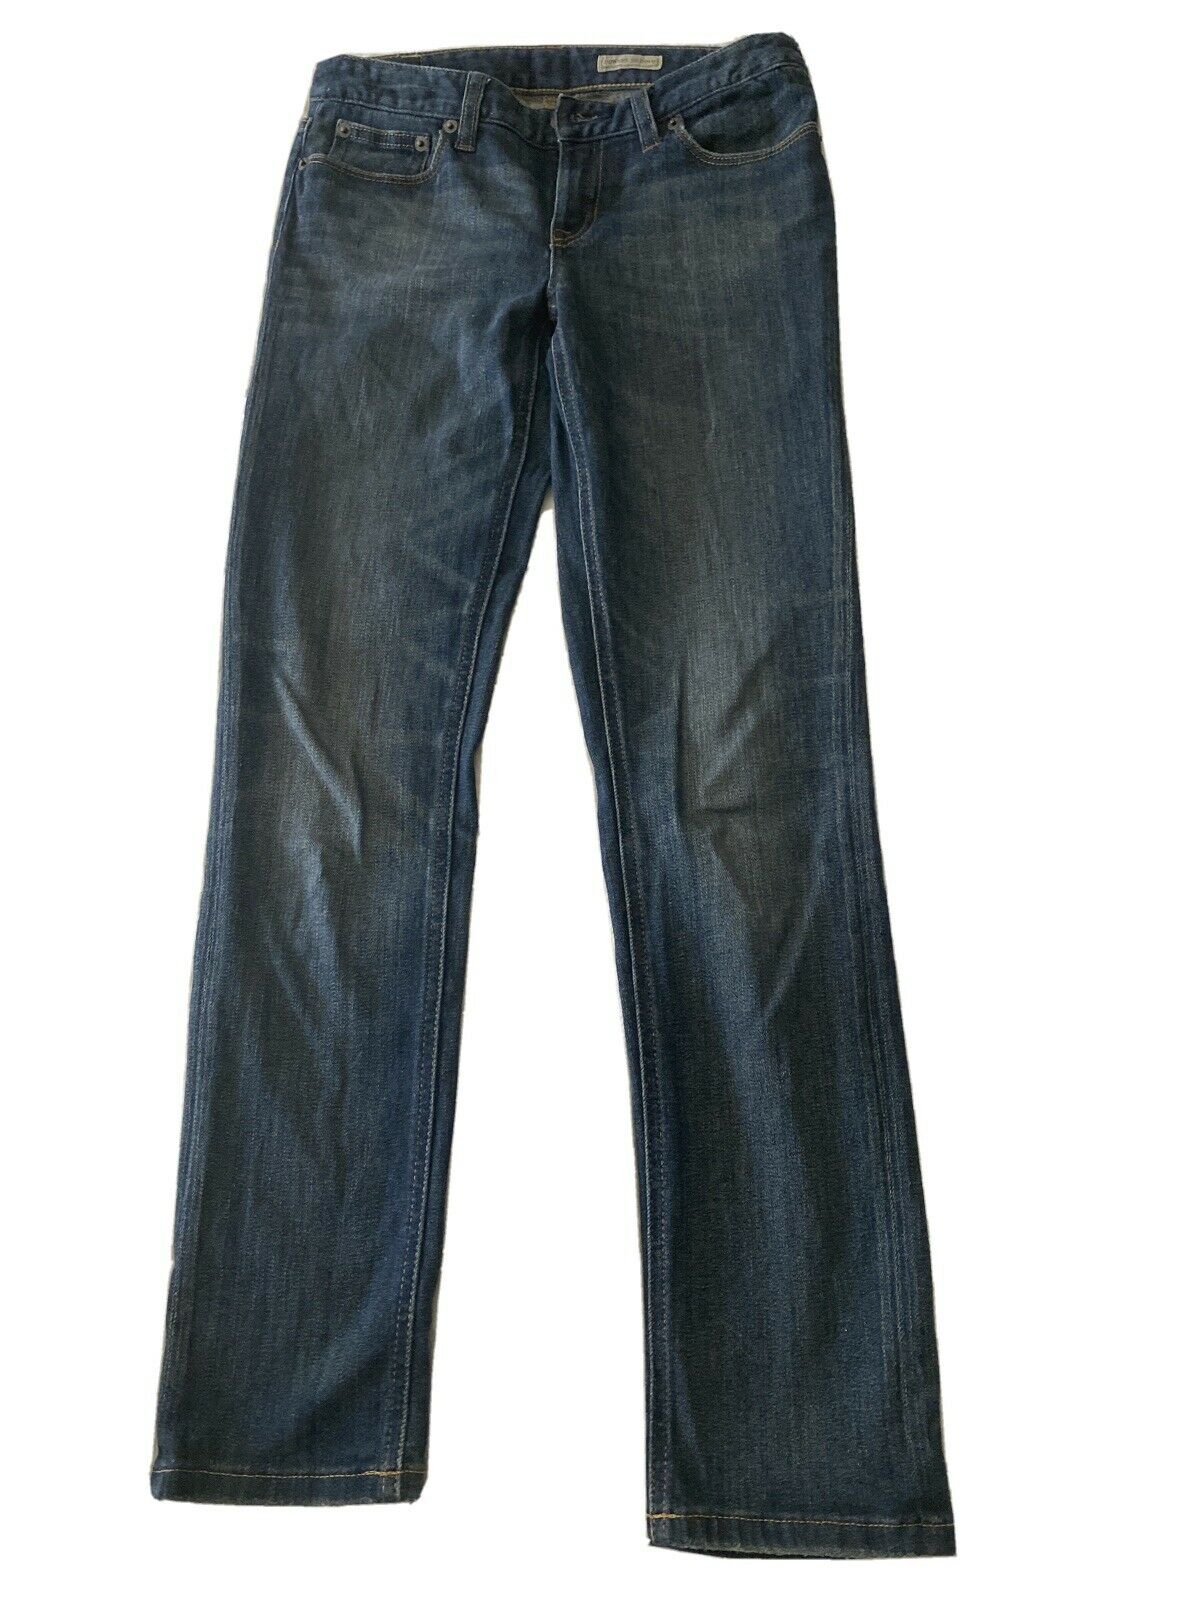 Ralph Lauren Denim Skinny Jeans Size 12 Excellent Condition!